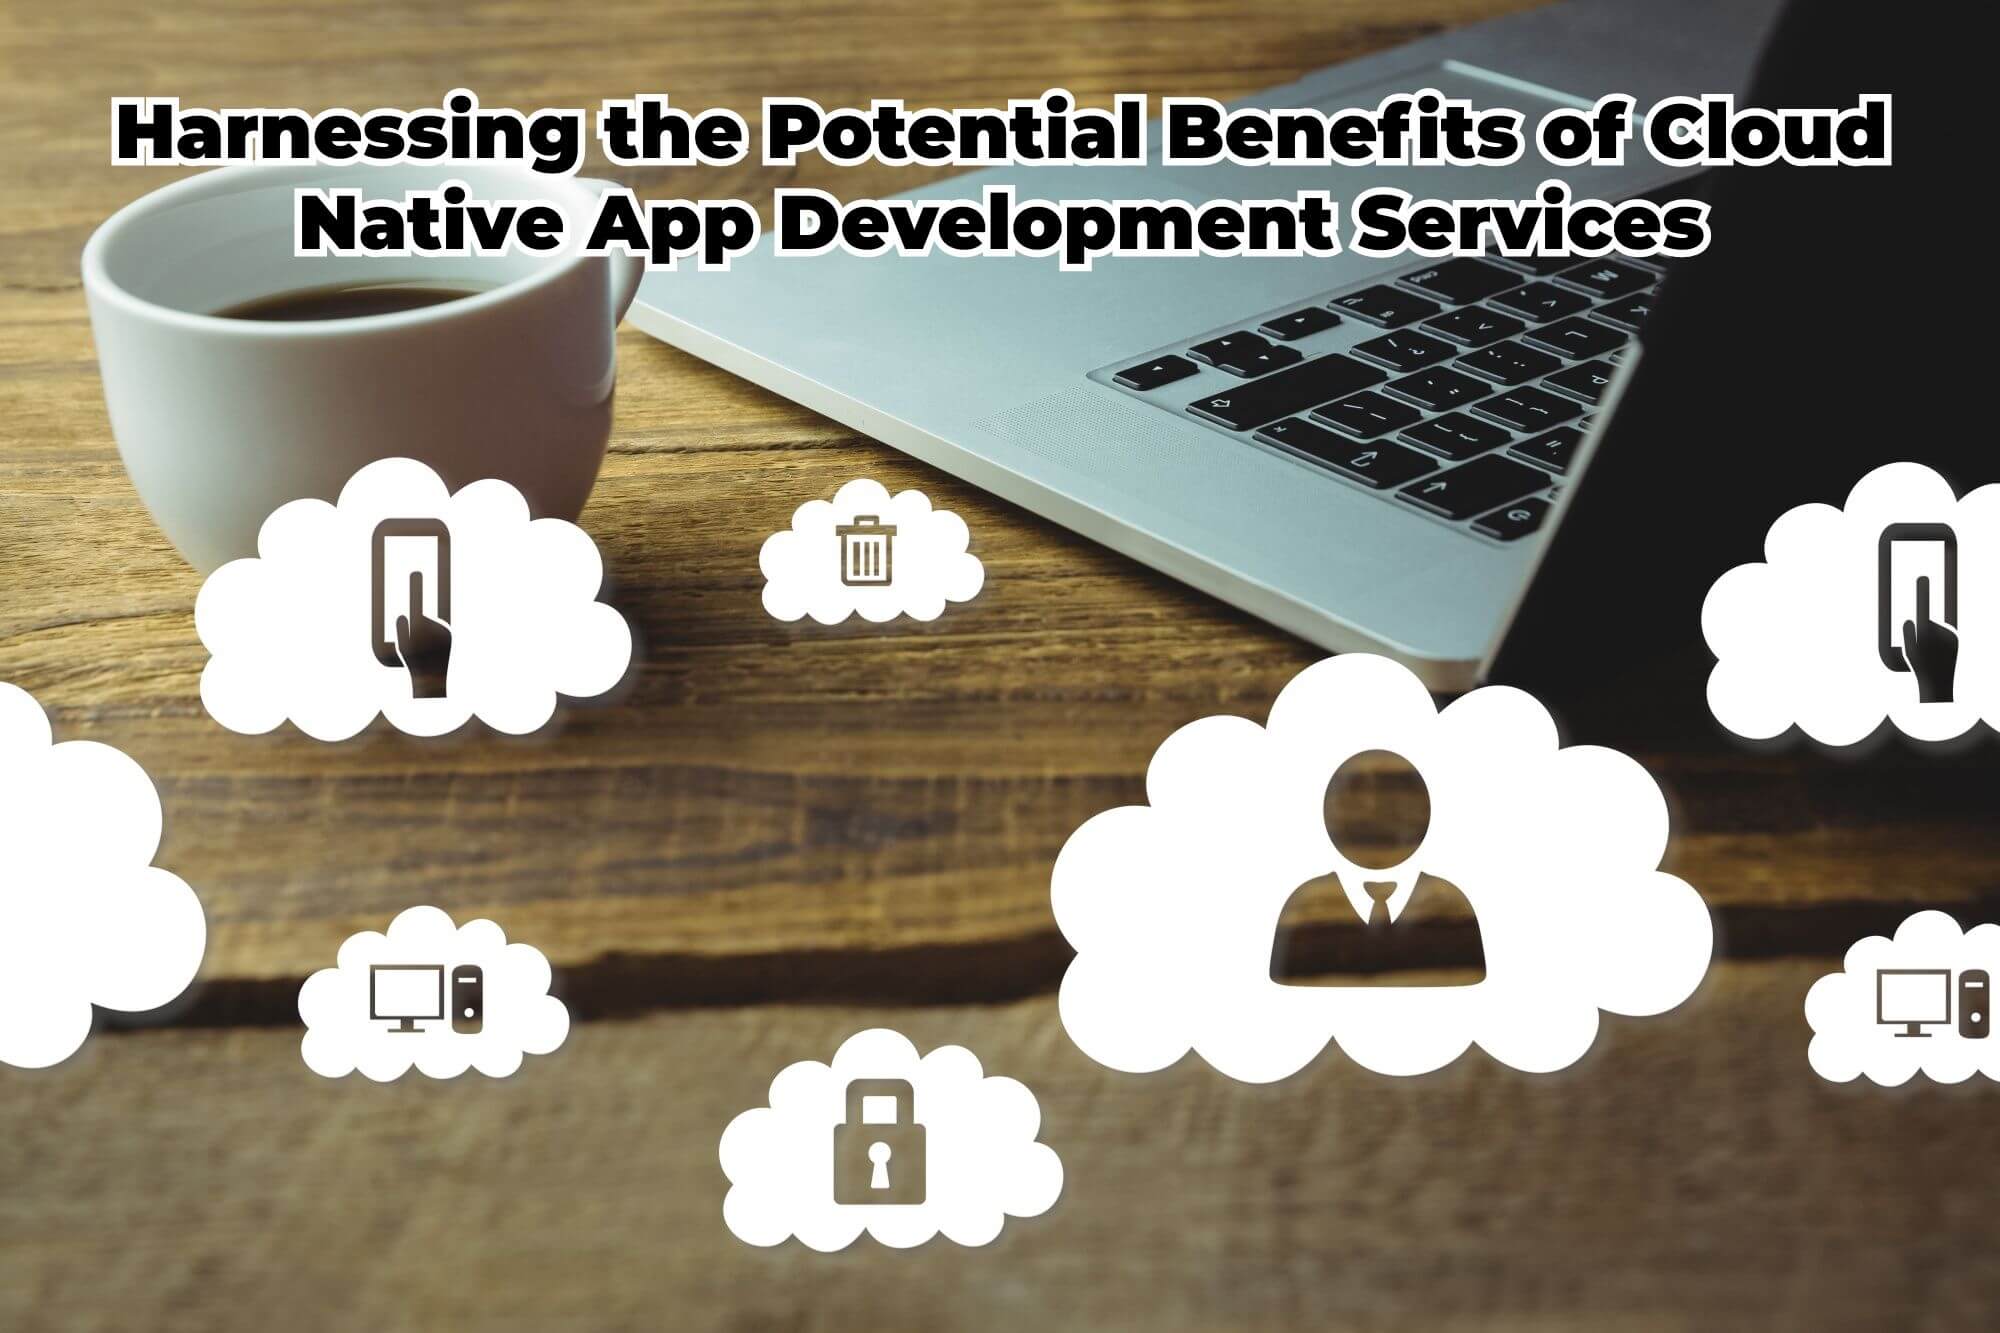 Cloud Native App Development